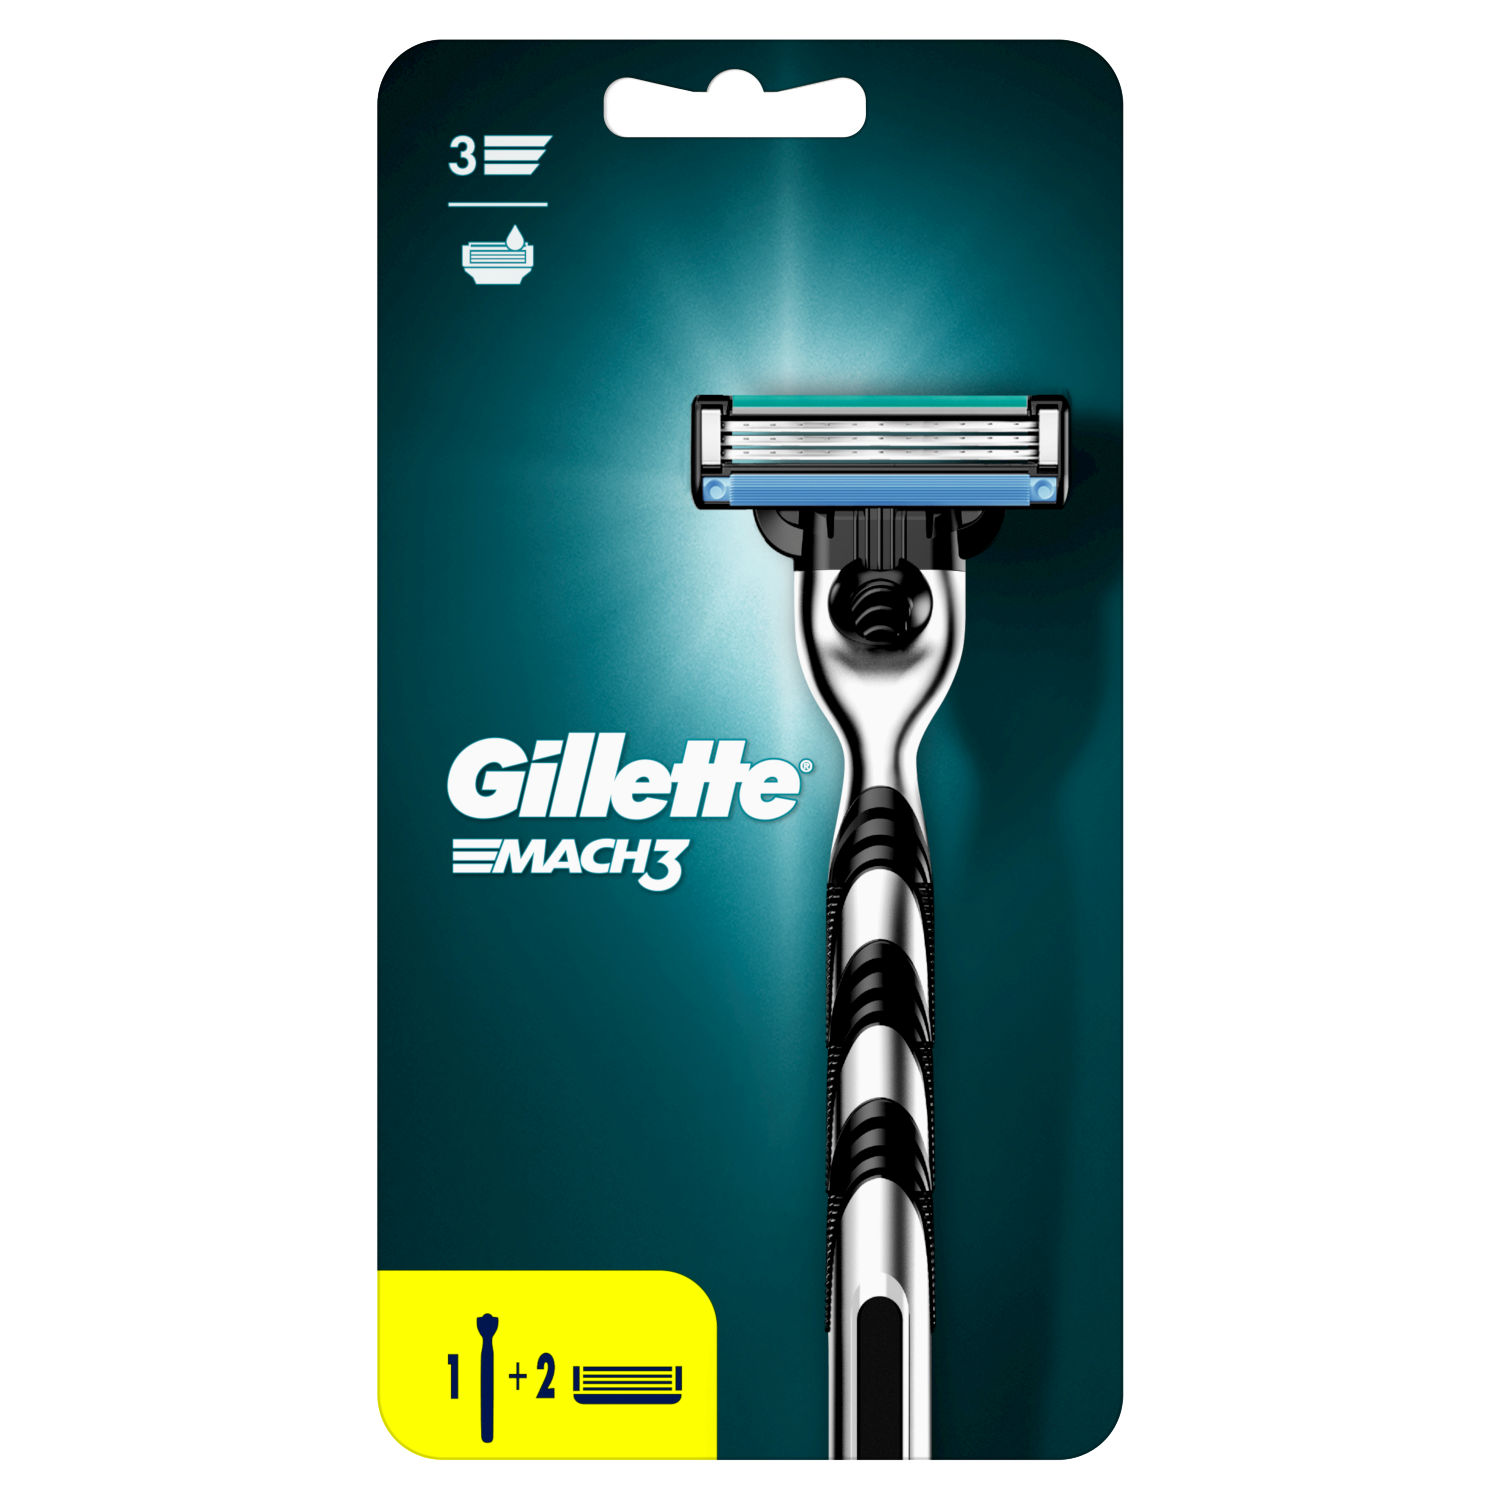 Gillette Mach3 набор: мужская бритвенная ручка, 1 шт + сменные лезвия, 2 шт/1 уп.